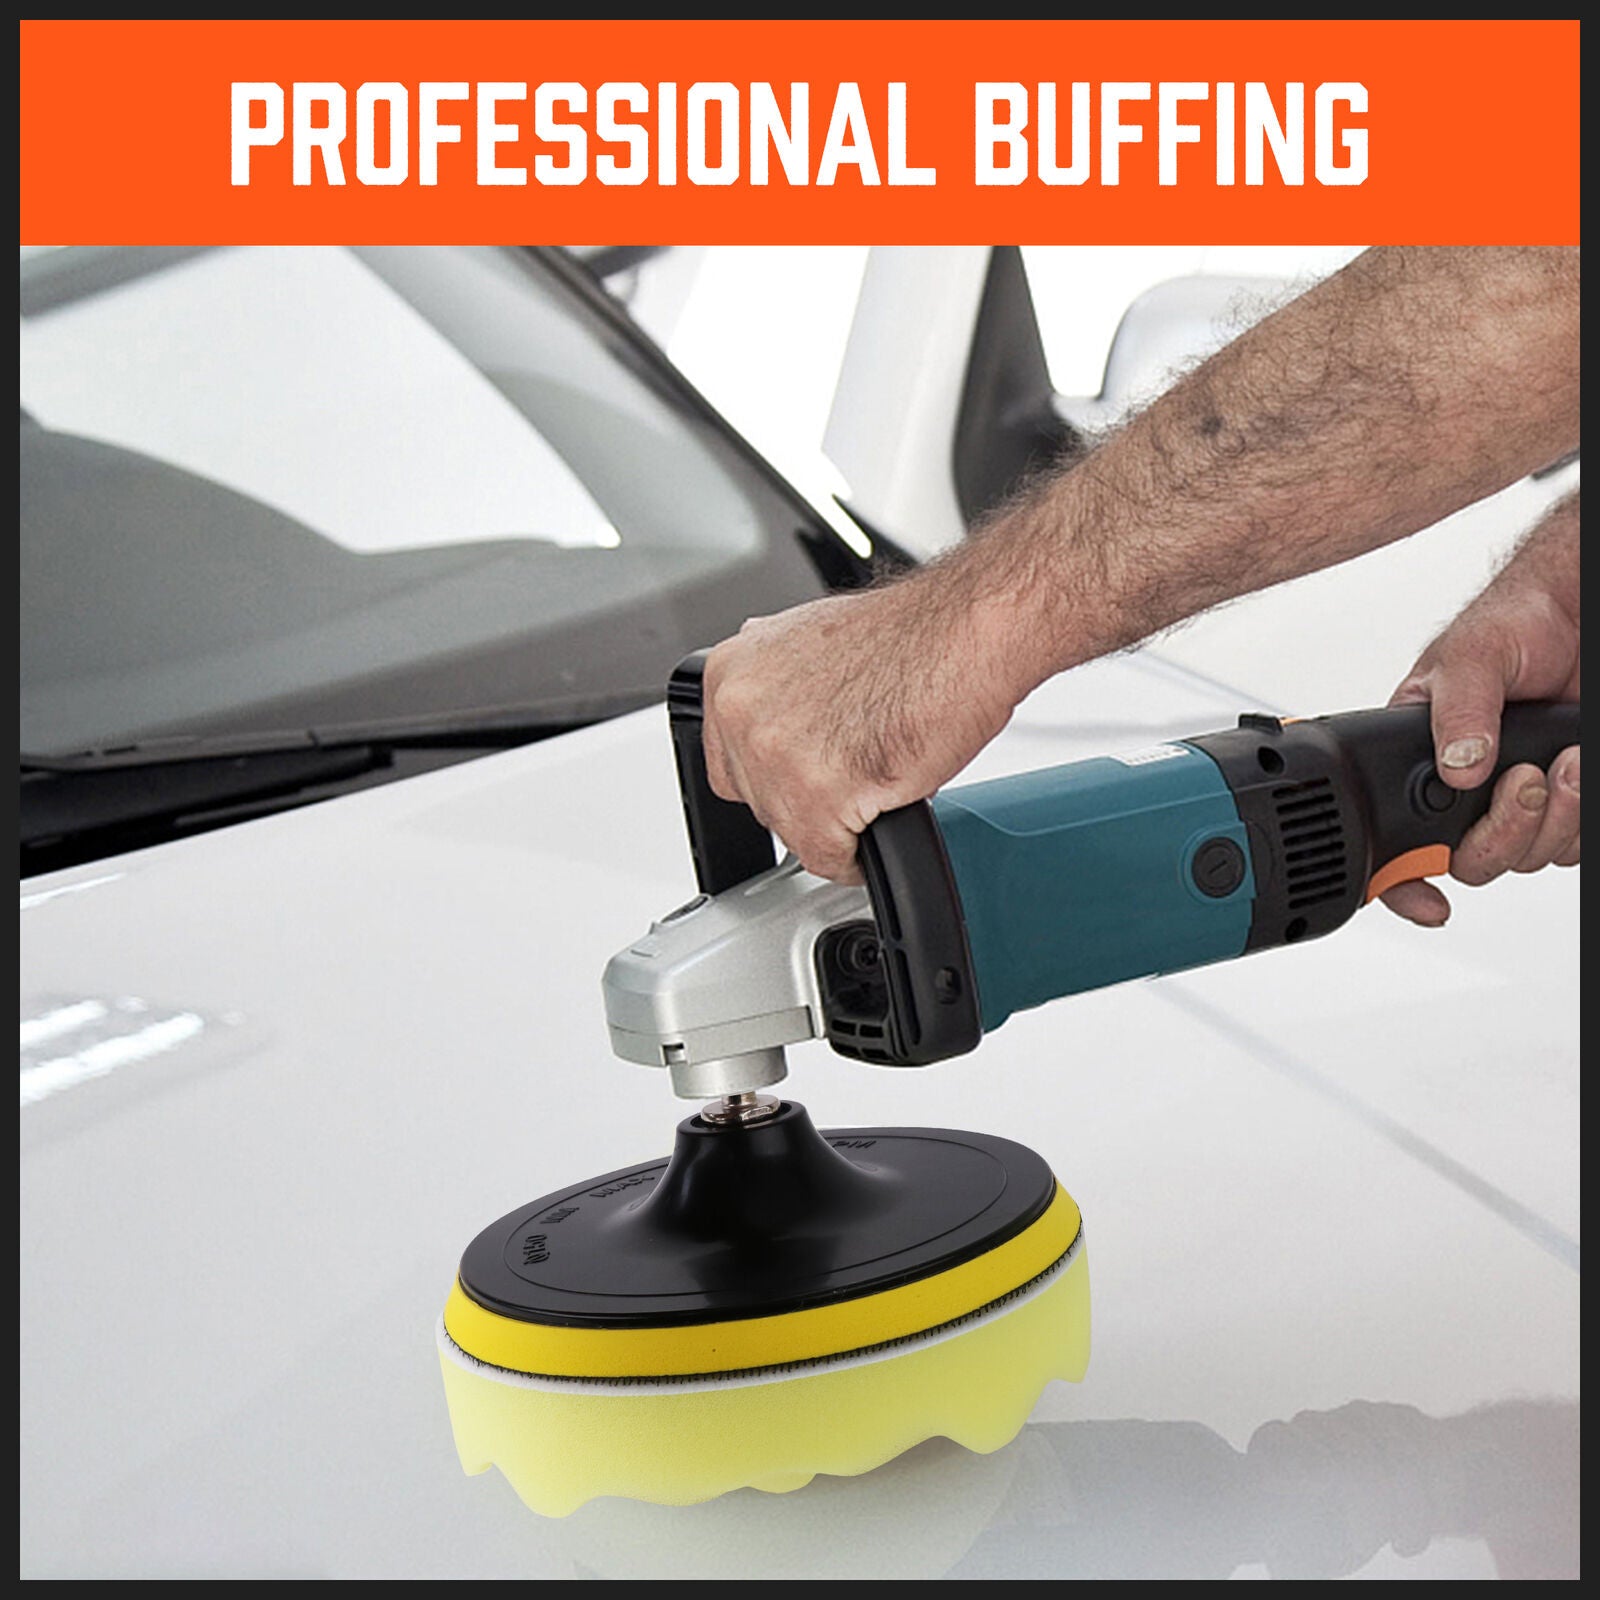 11Pc 6" Buffing Waxing Polishing Pads Kit Sponge Pad Set For Car Polisher Drill